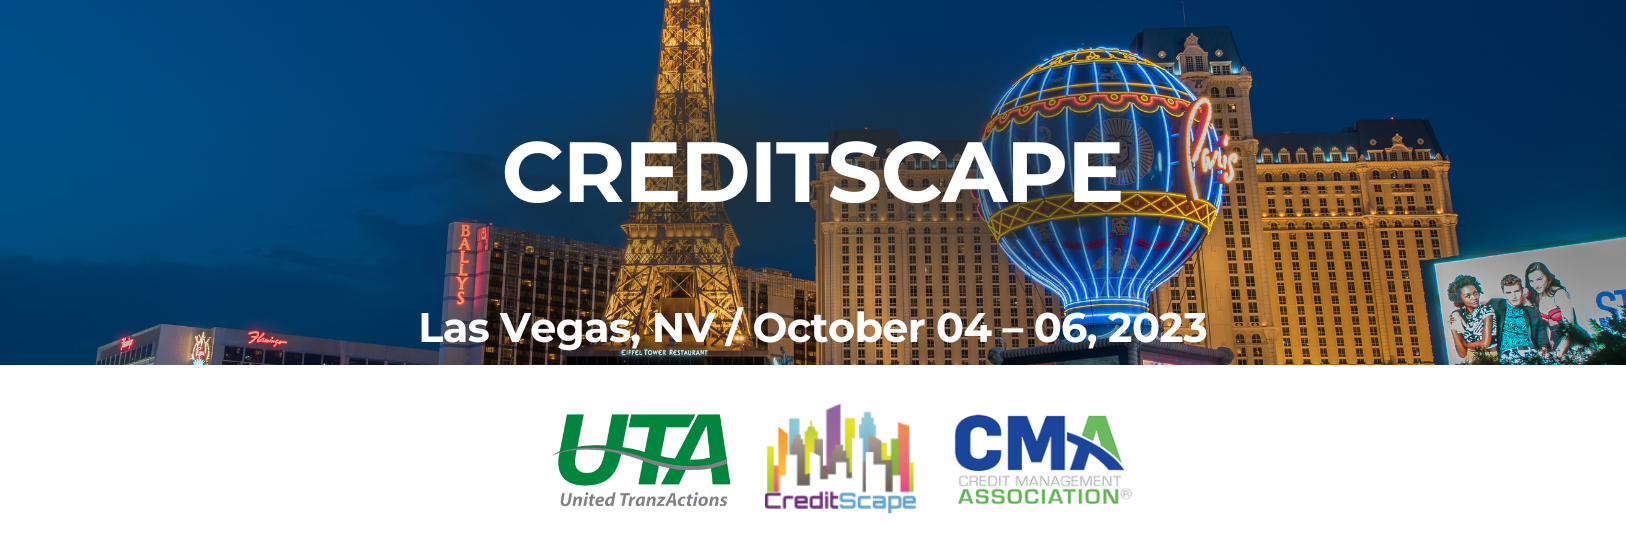 CMA: CreditScape - Las Vegas, NV. October 04 – 06, 2023